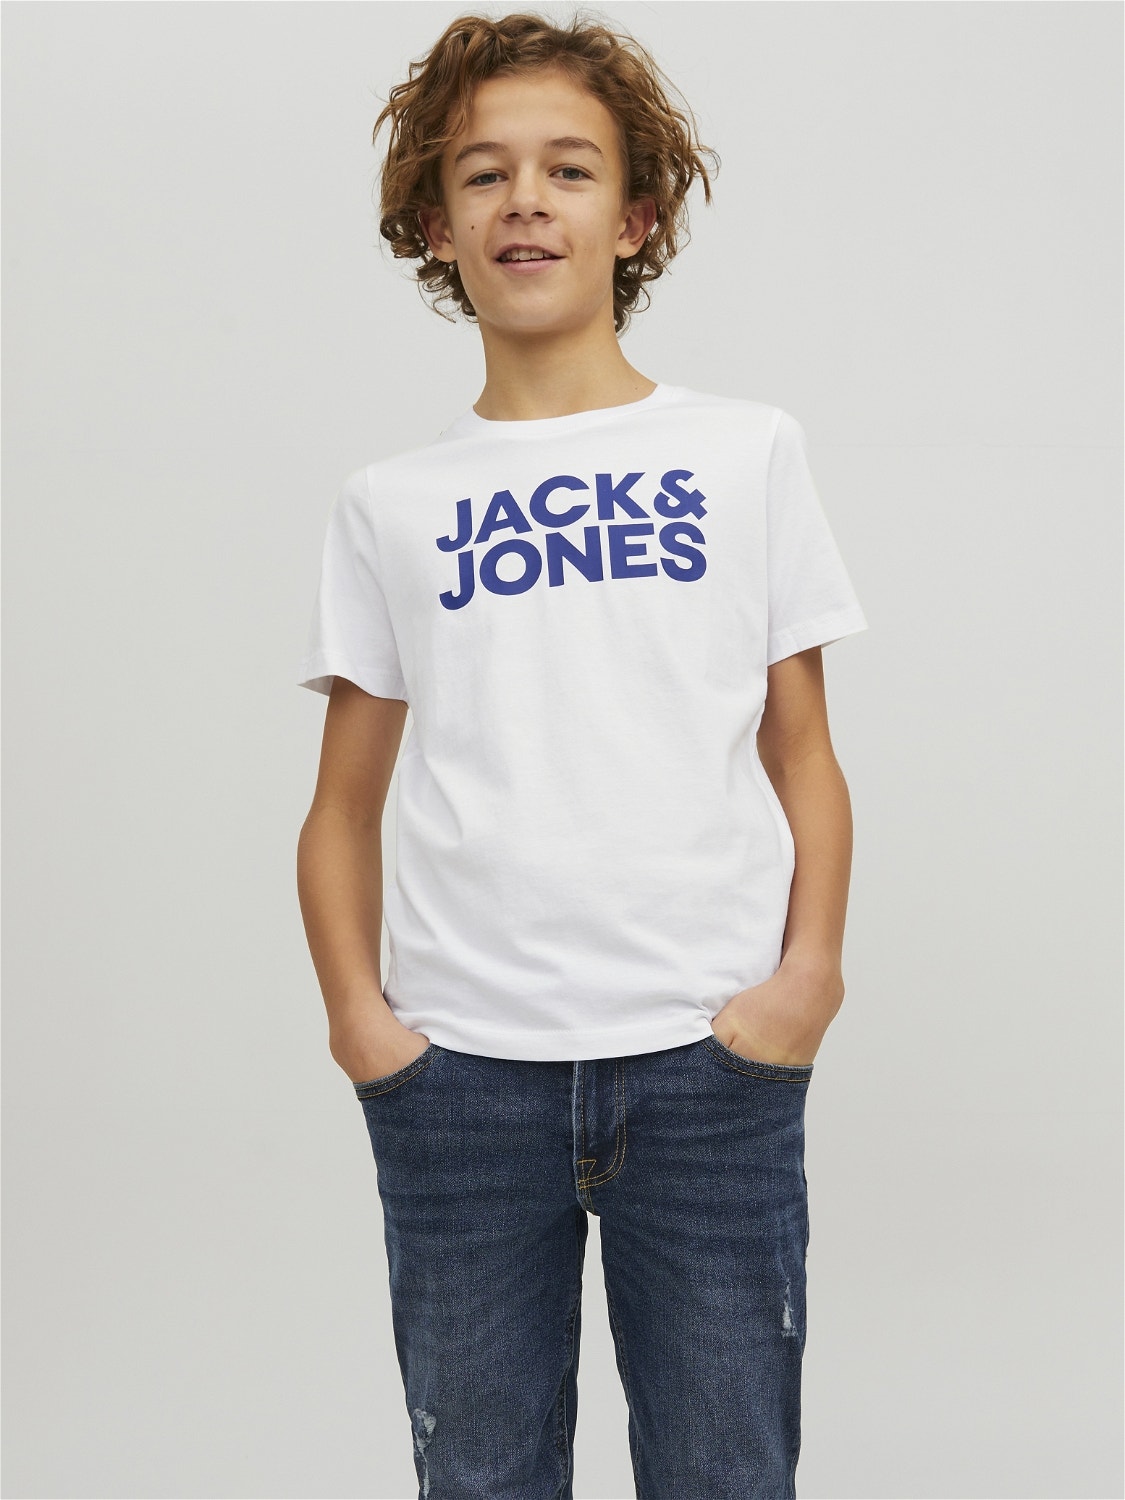 Jack & Jones 2er-pack Logo T-shirt Für jungs -Navy Blazer - 12199947